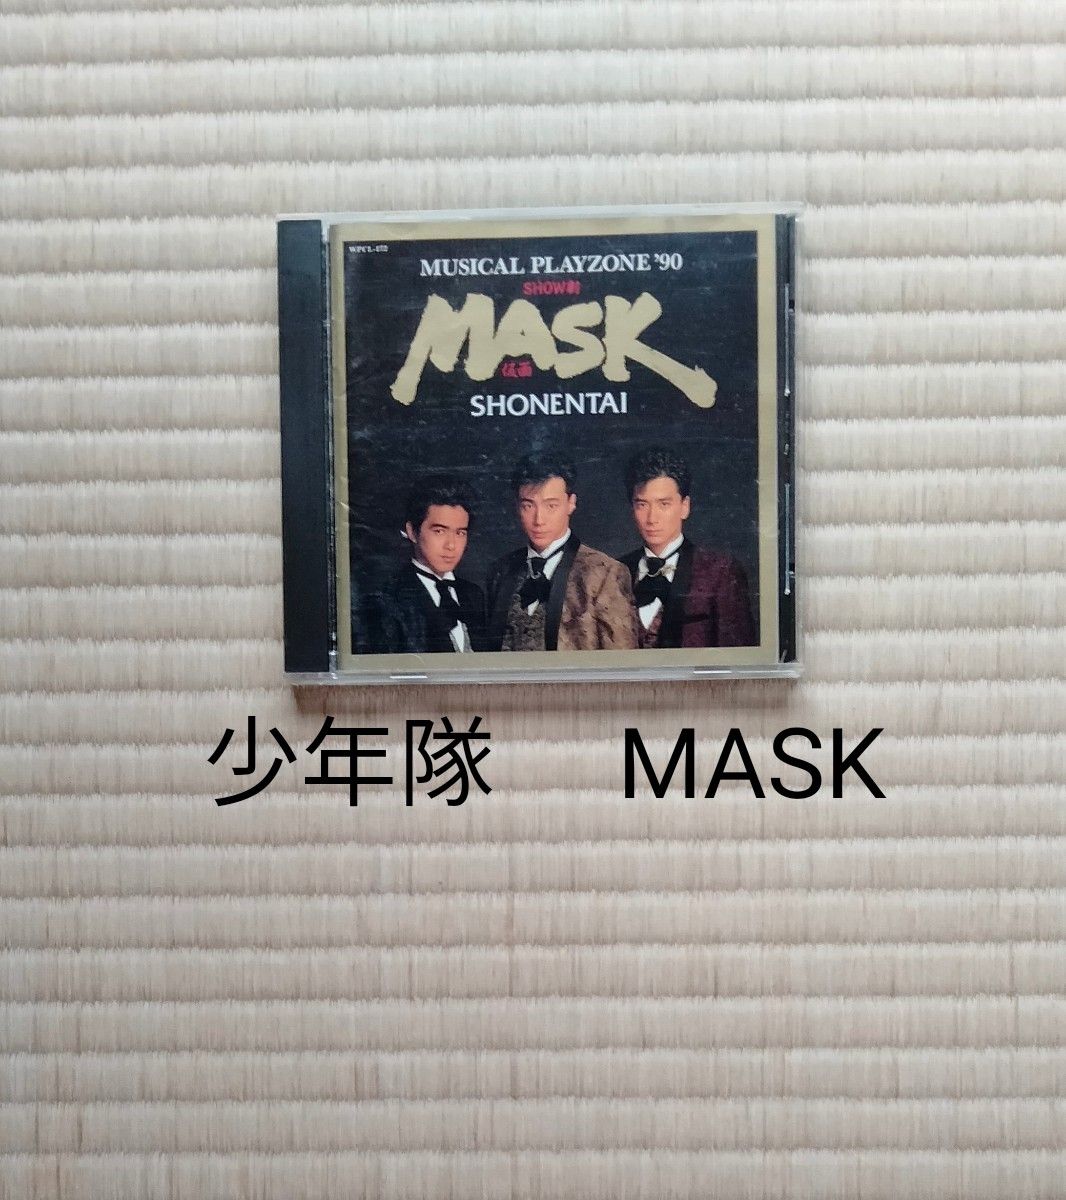 CD　少年隊 　MASK 　 アルバム　ミュージカル PLAYZONE ’90 　アイドル　 ジャニーズ